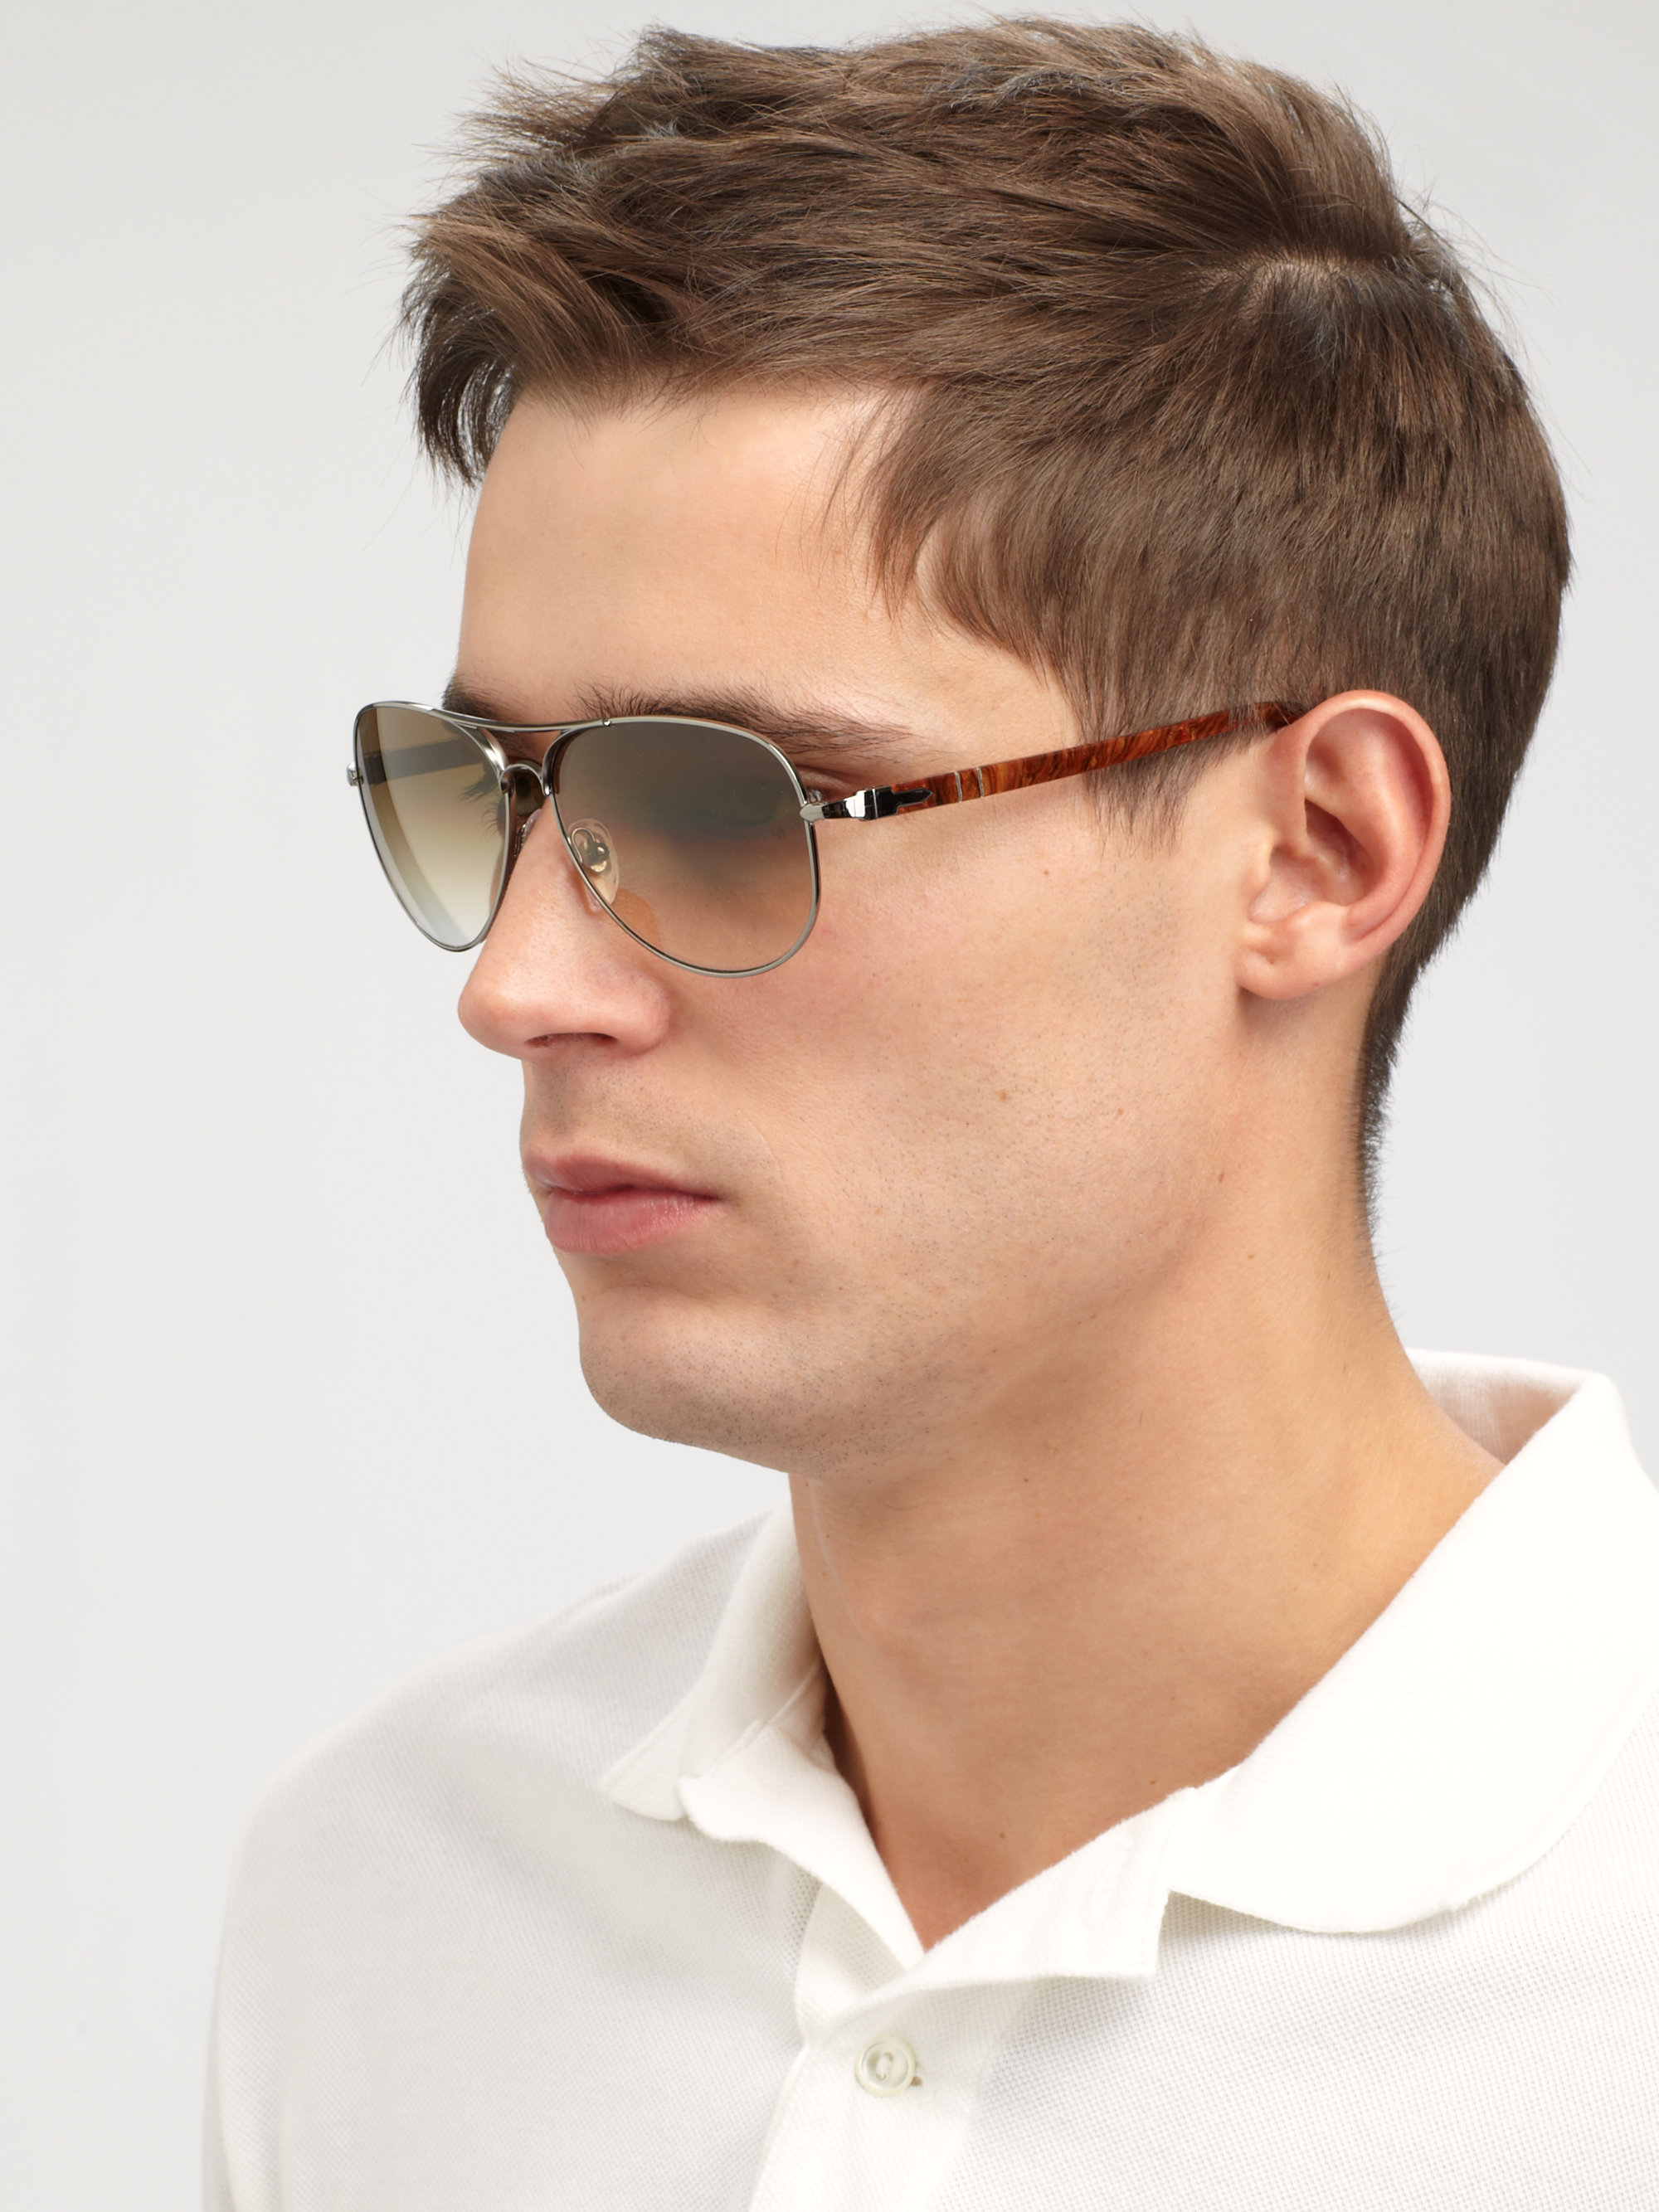 Persol Classic Aviator Sunglasses in Metallic for Men - Lyst